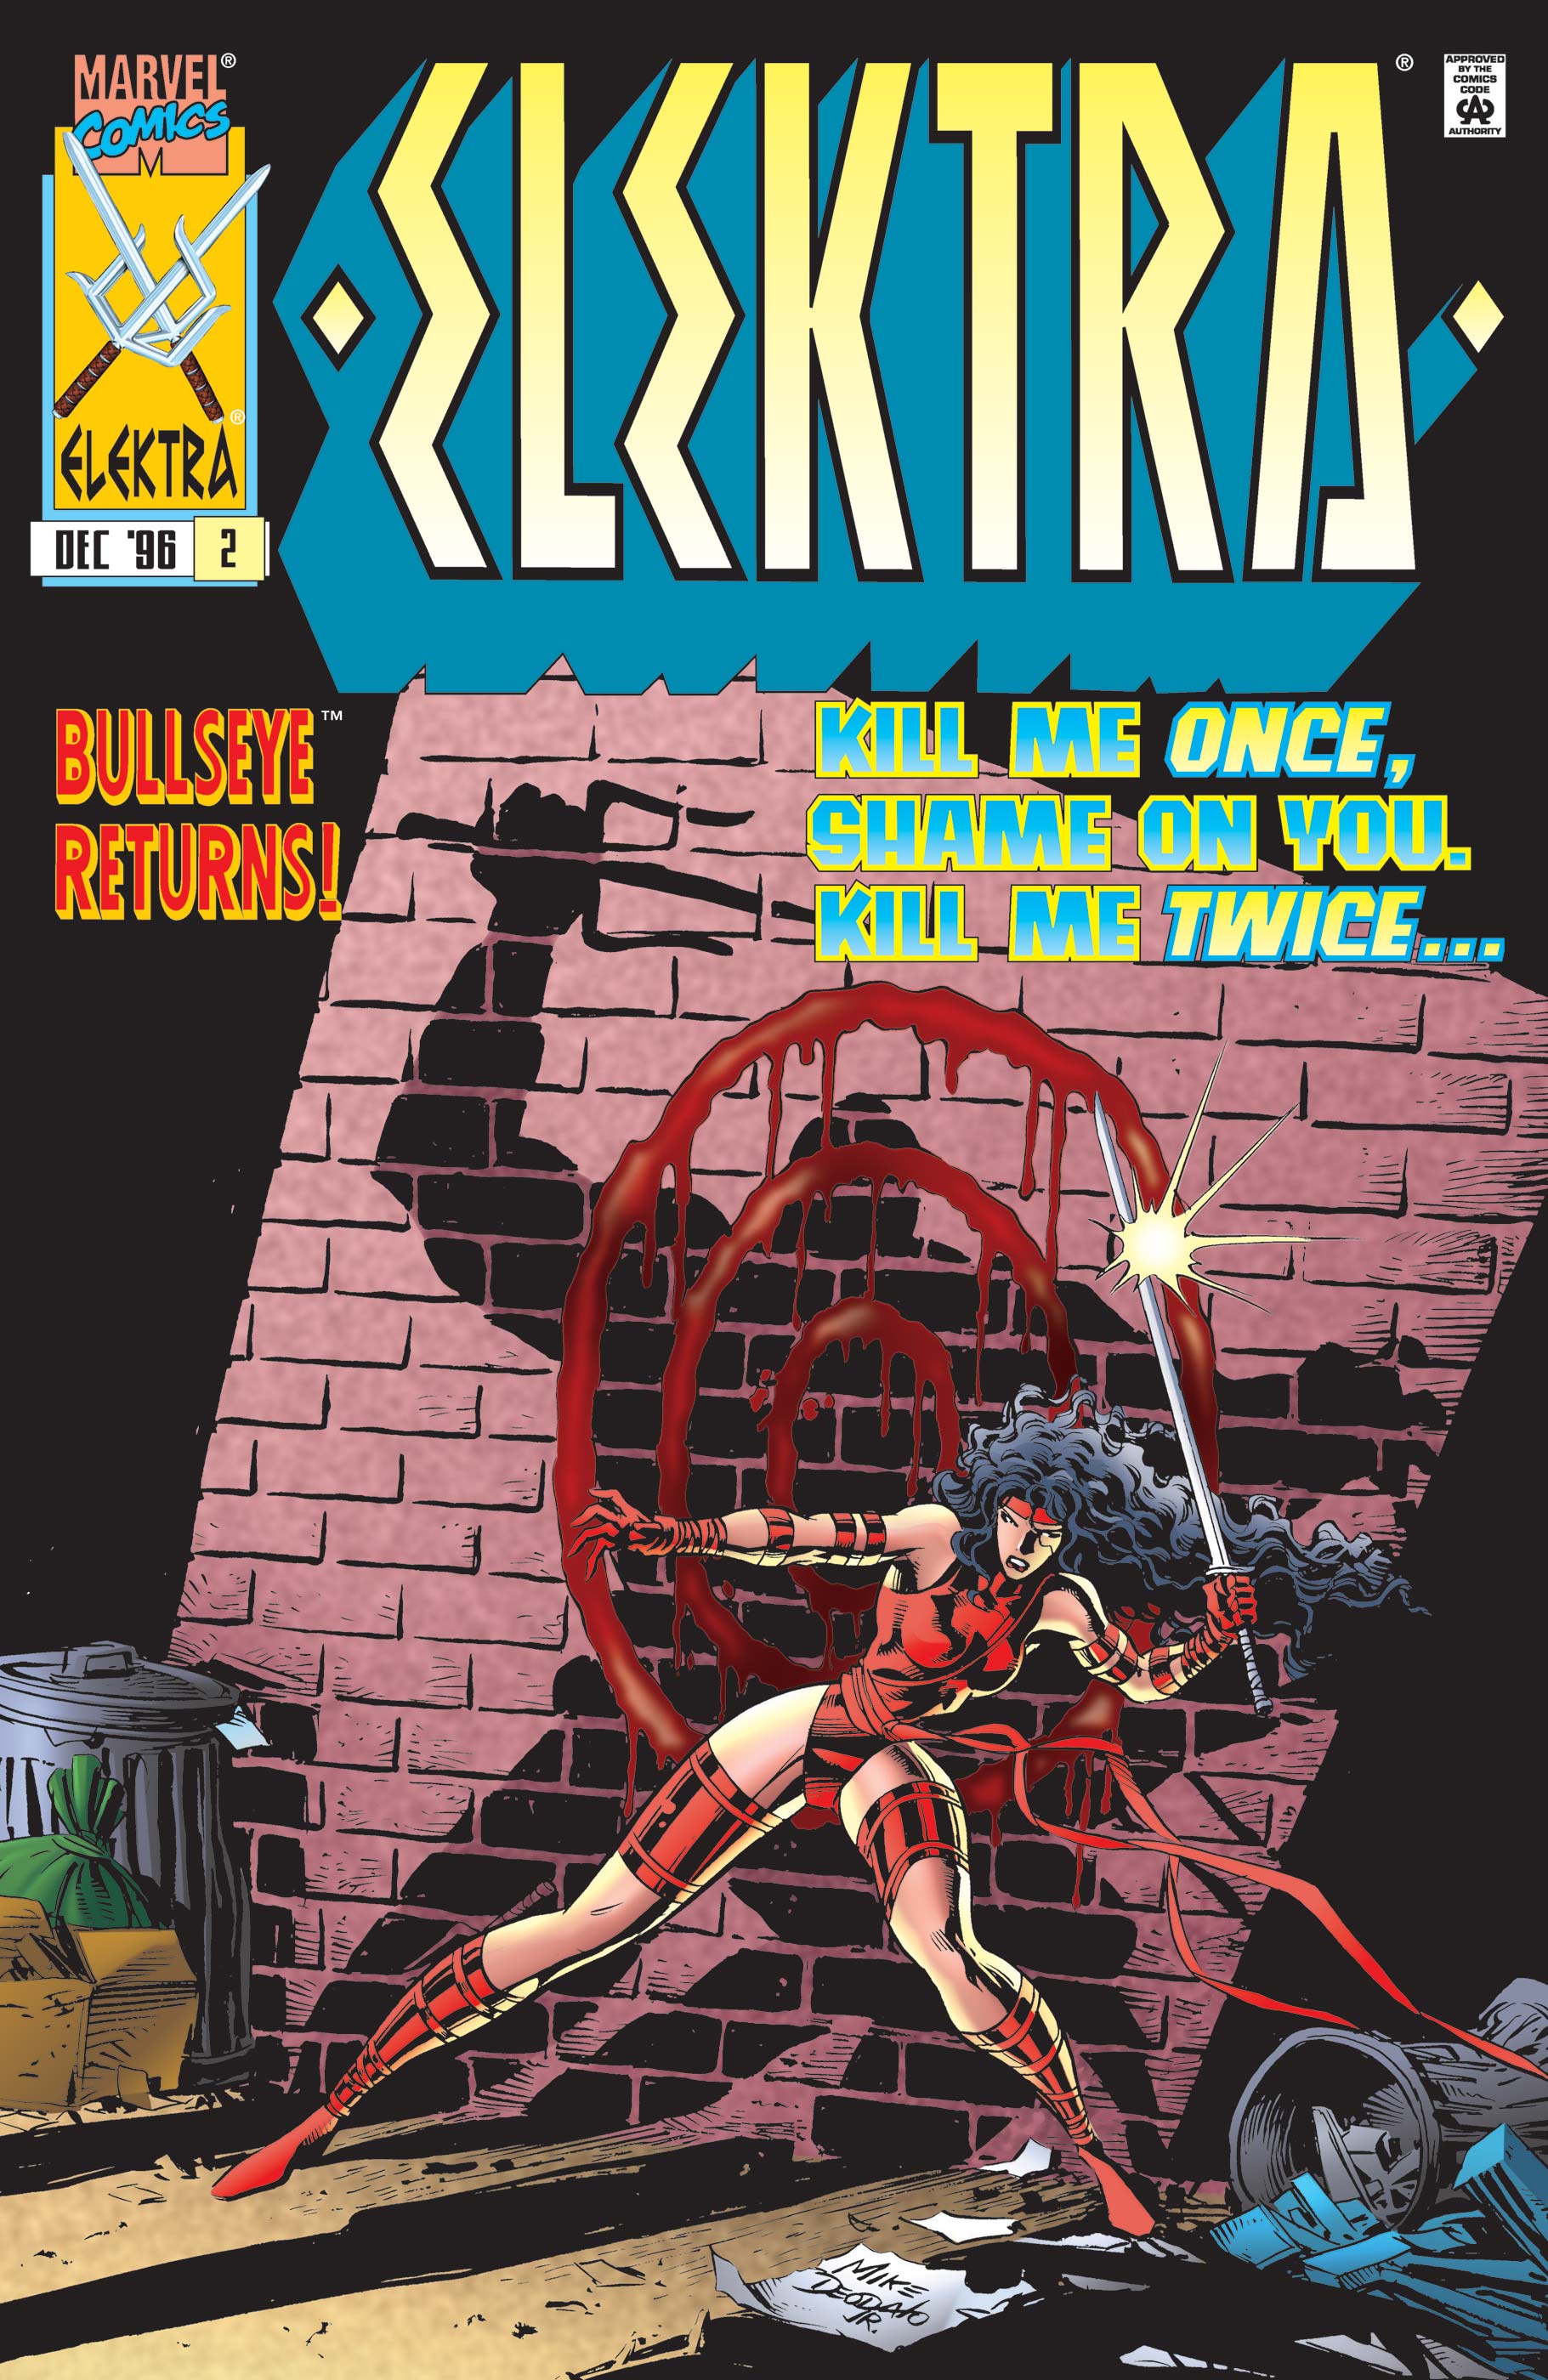 Elektra (1996) #2